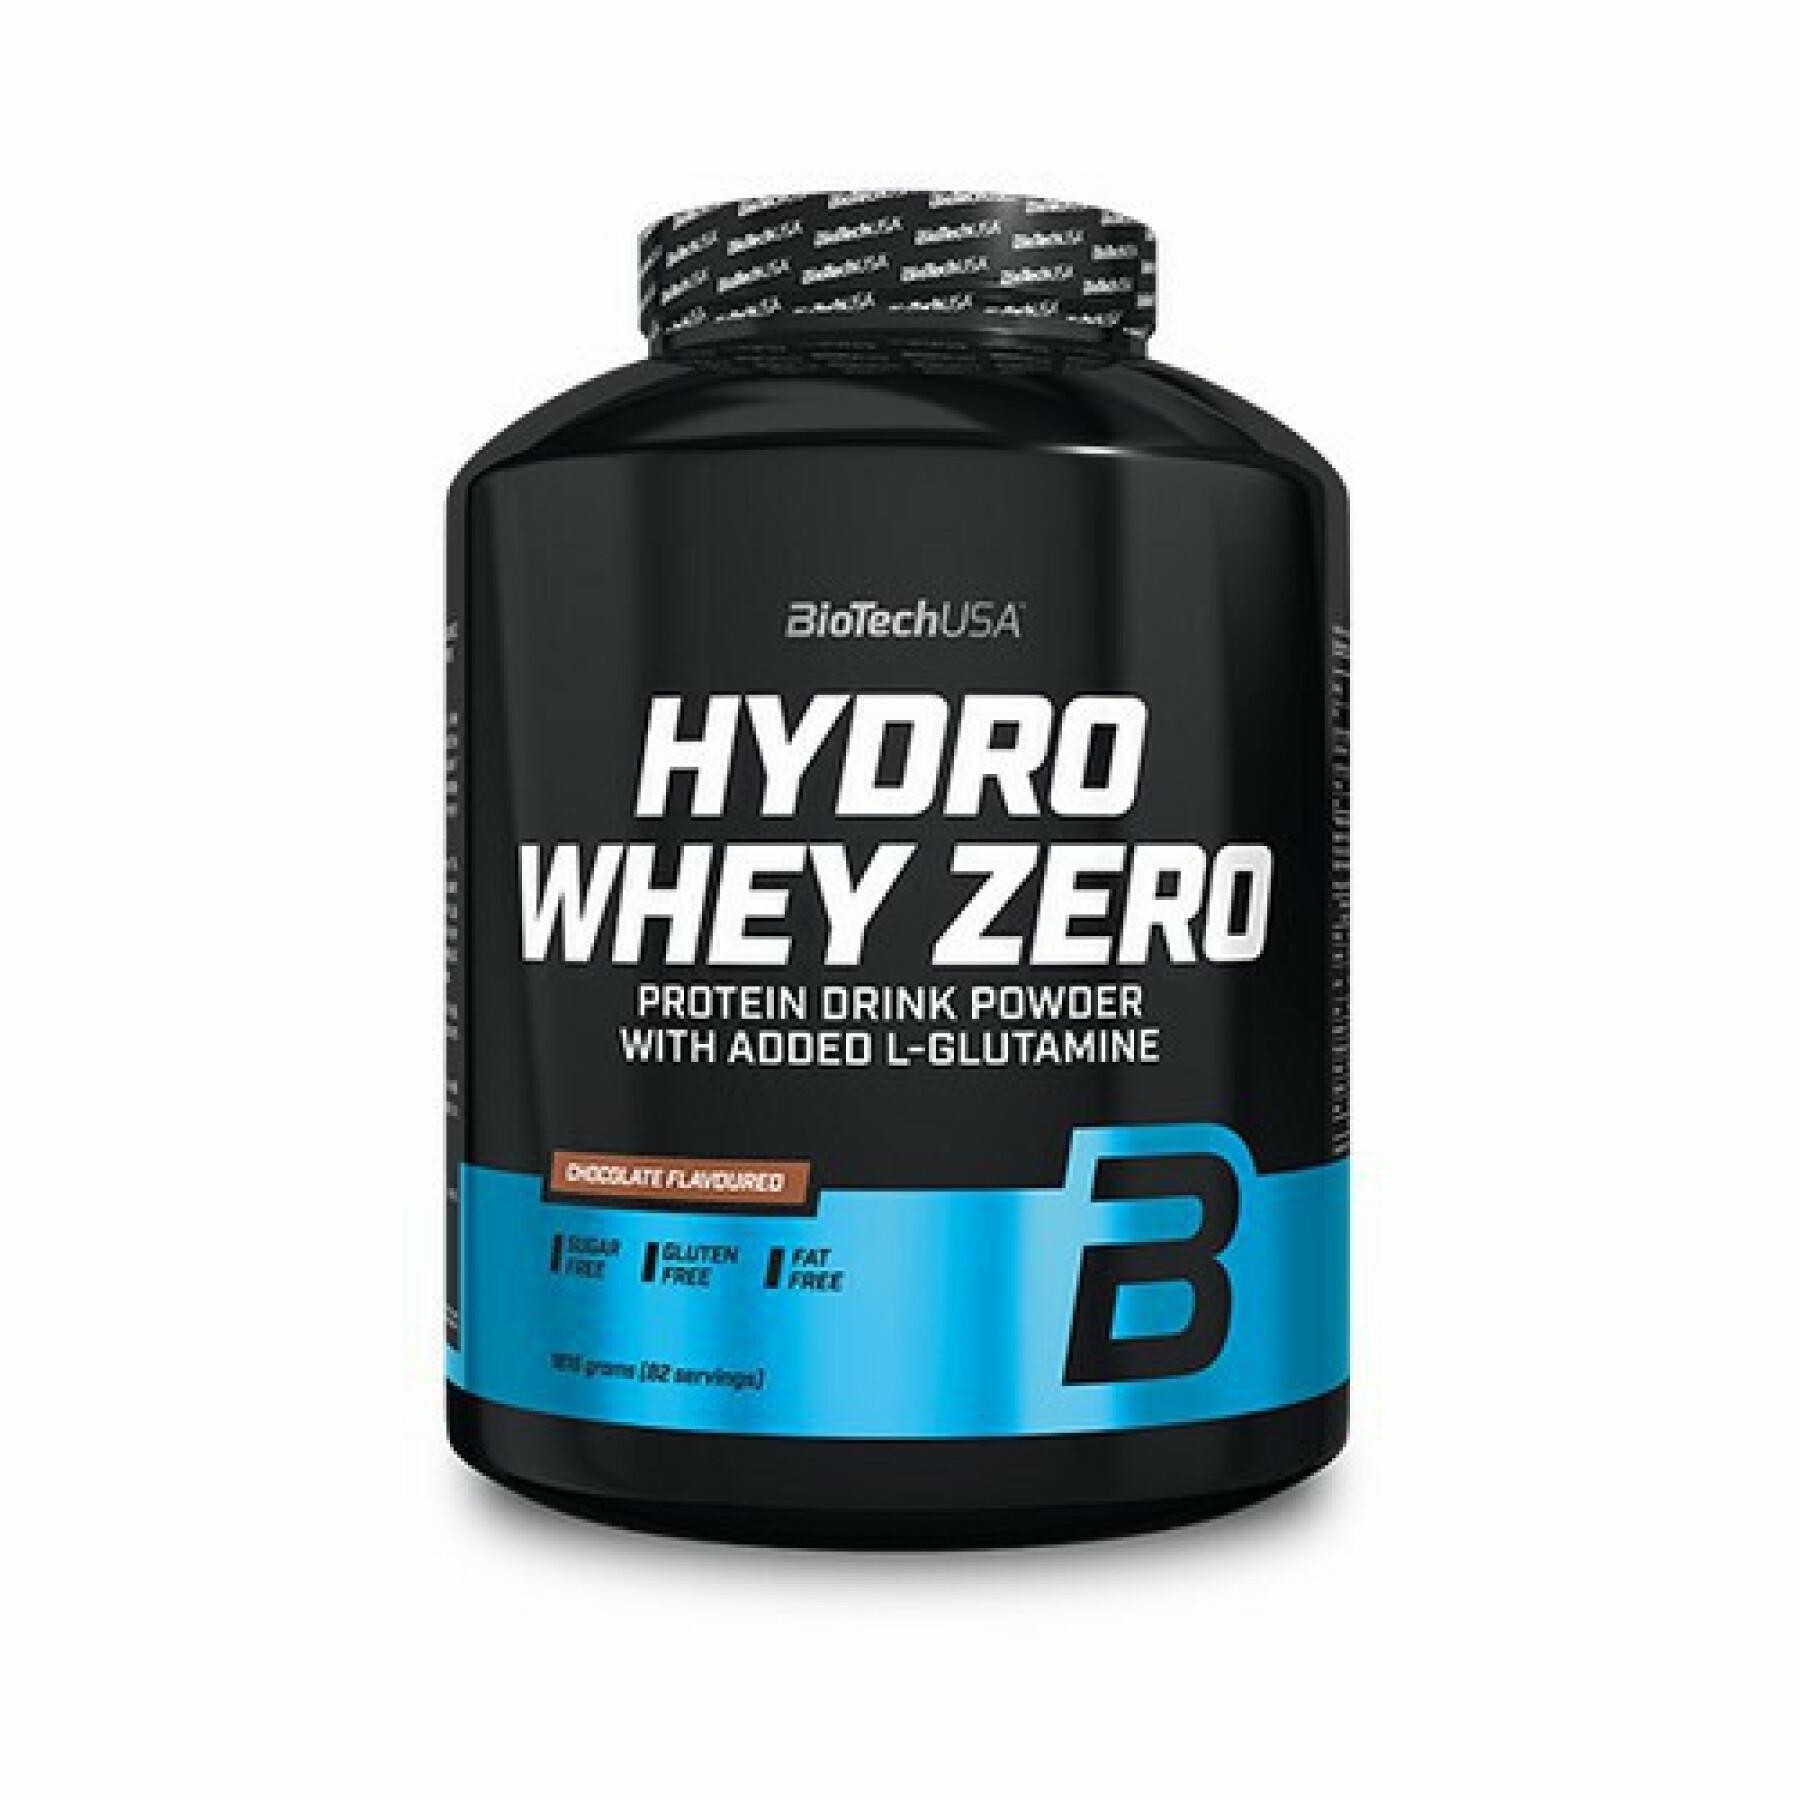 Pak van 10 zakjes proteïne Biotech USA hydro whey zero - Chocolate - 454g